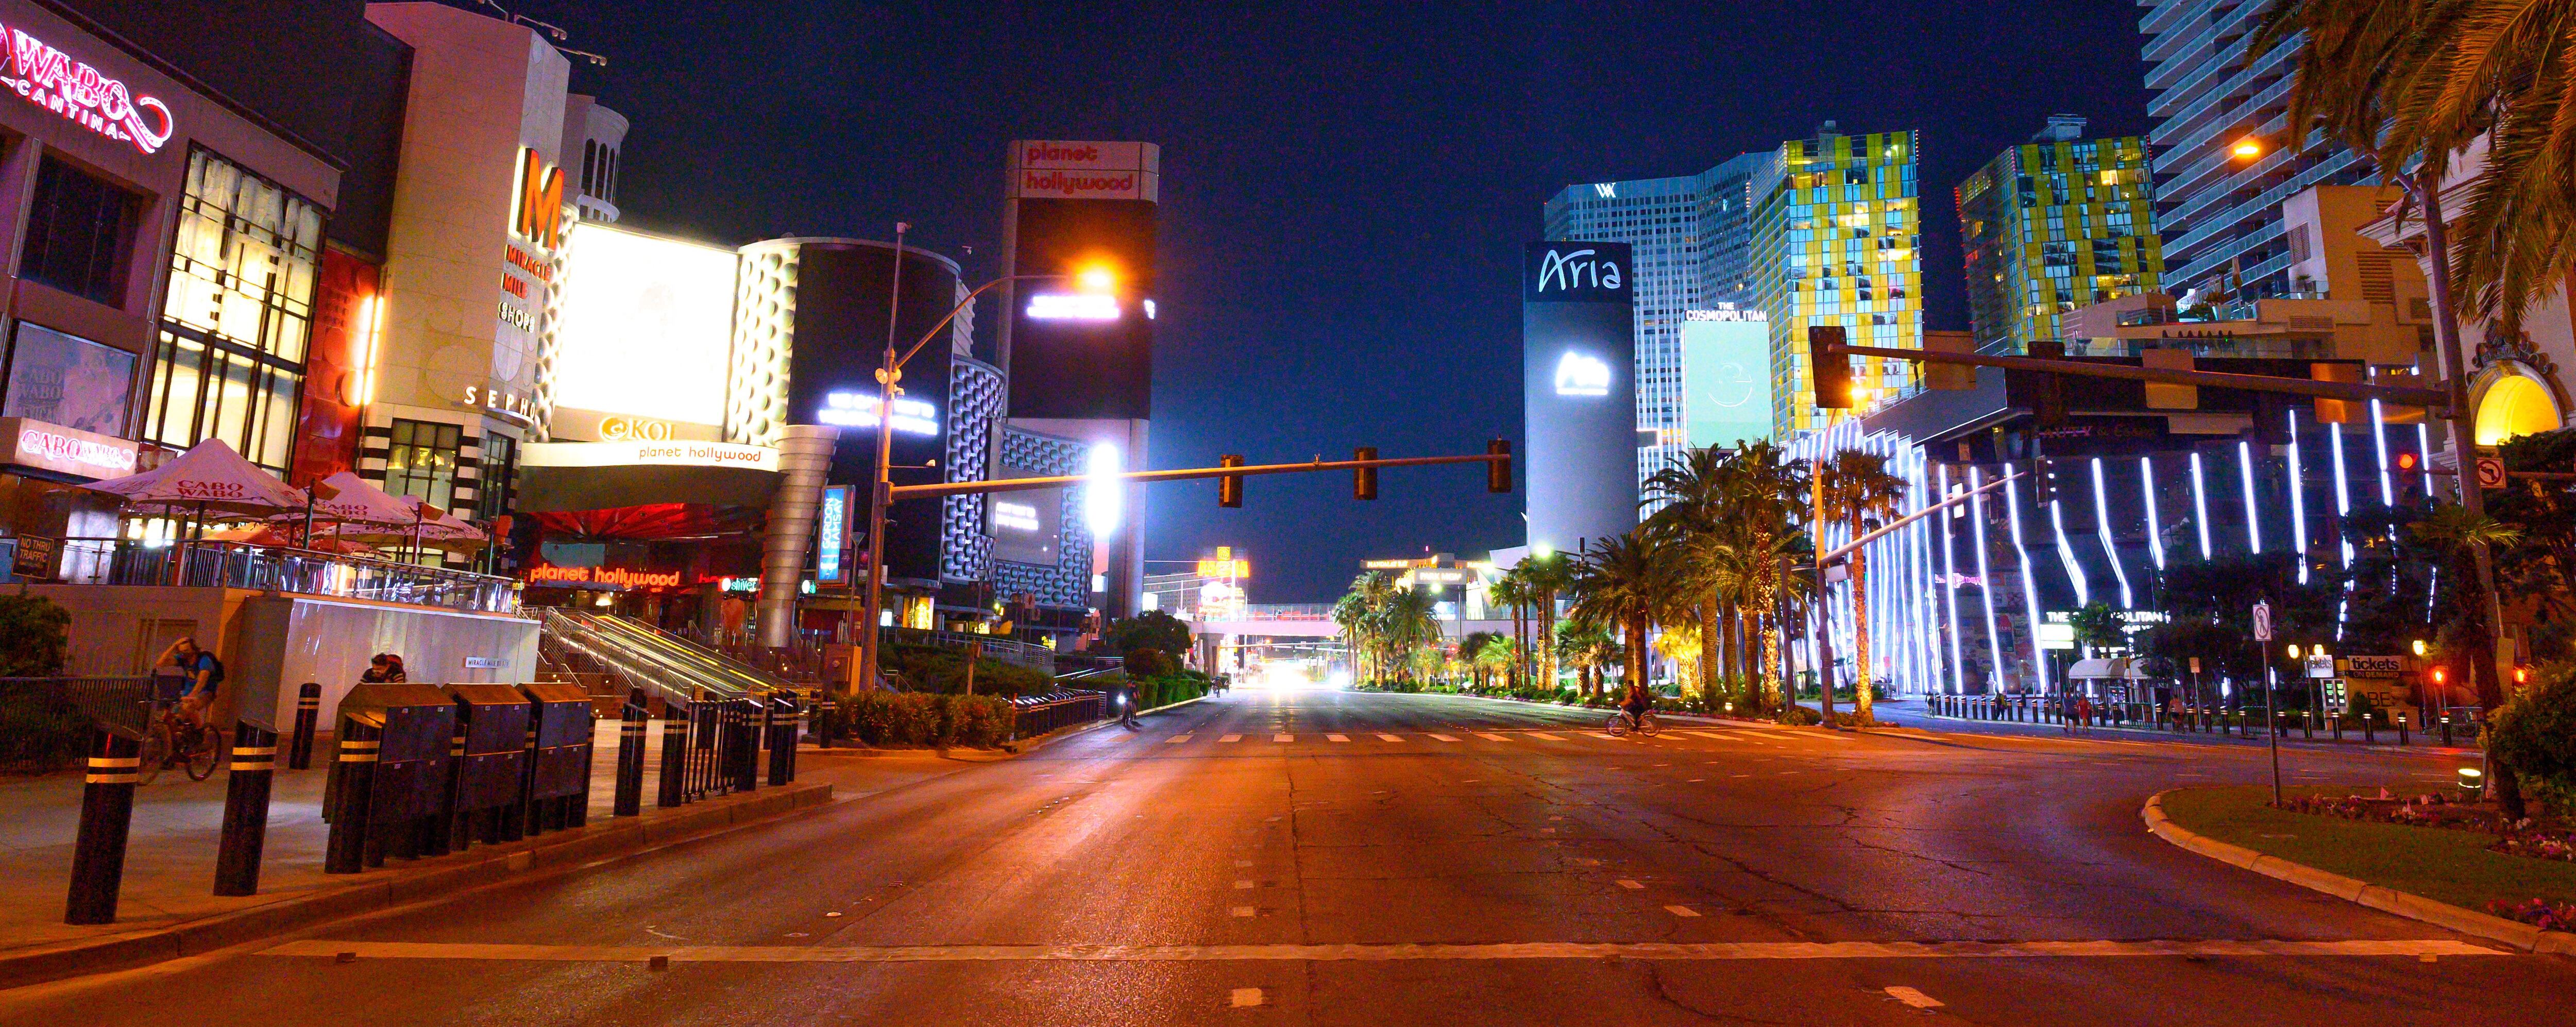 A Strip de Las Vegas, vazia desde o dia 5 de maio. 